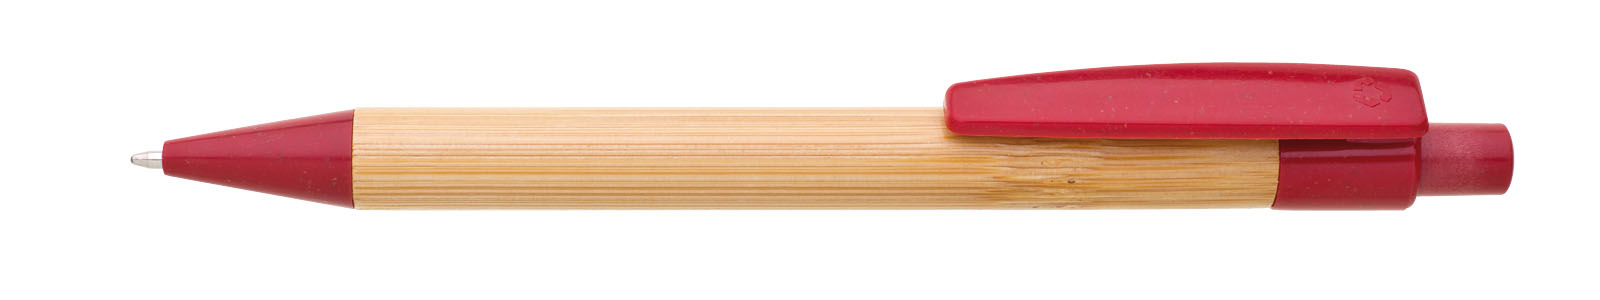 Propiska bambus BORGO STRAW, červená